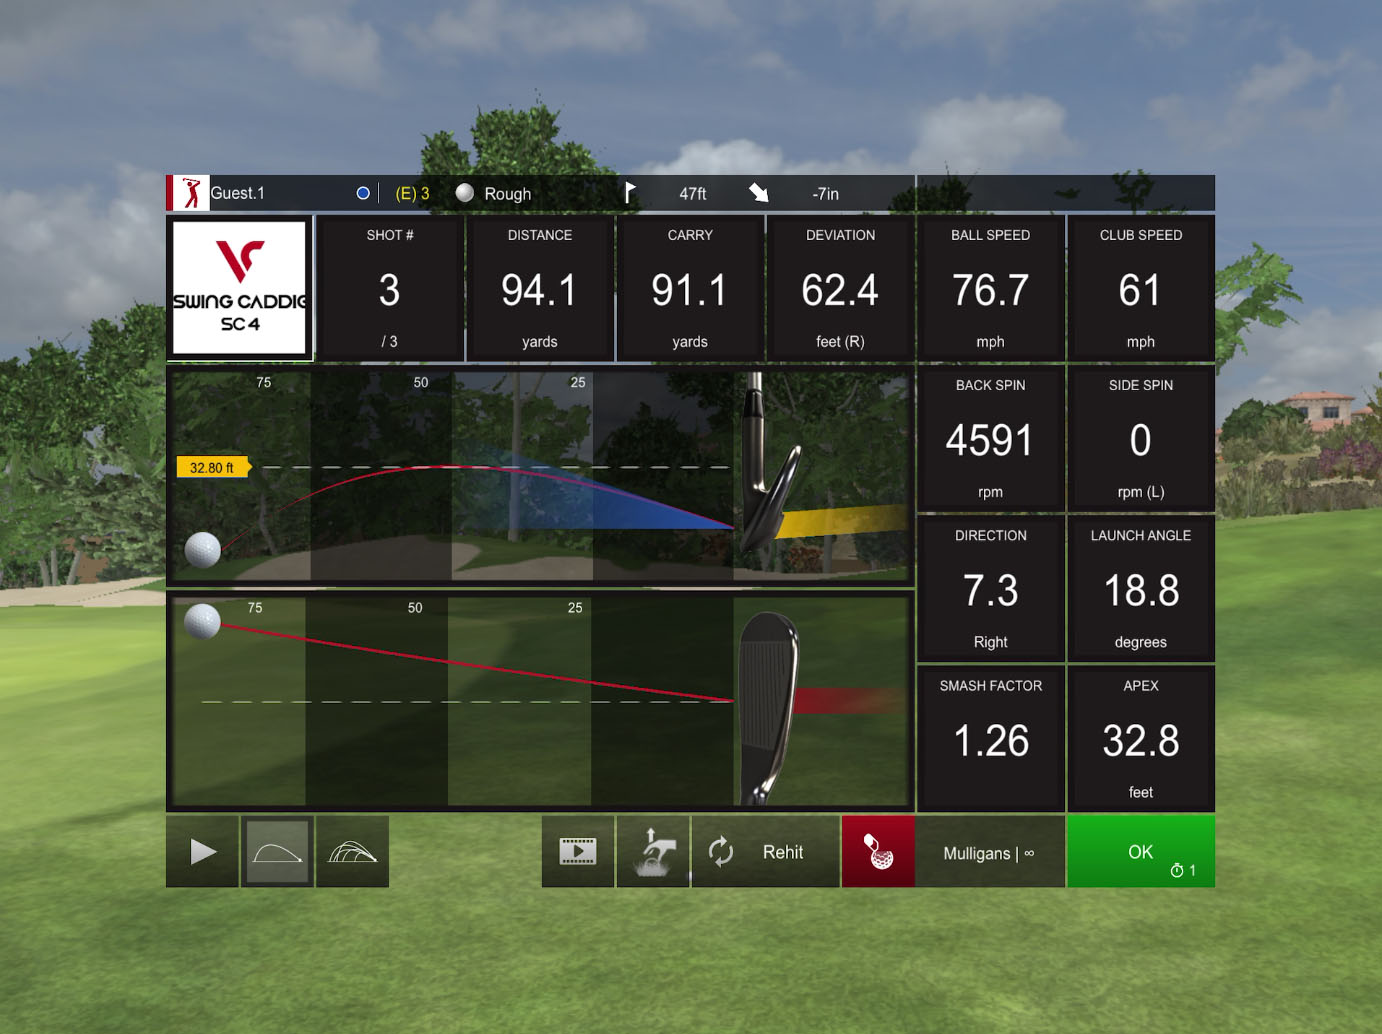 Swing Caddie SC4 Launch Monitor & Golf Simulator